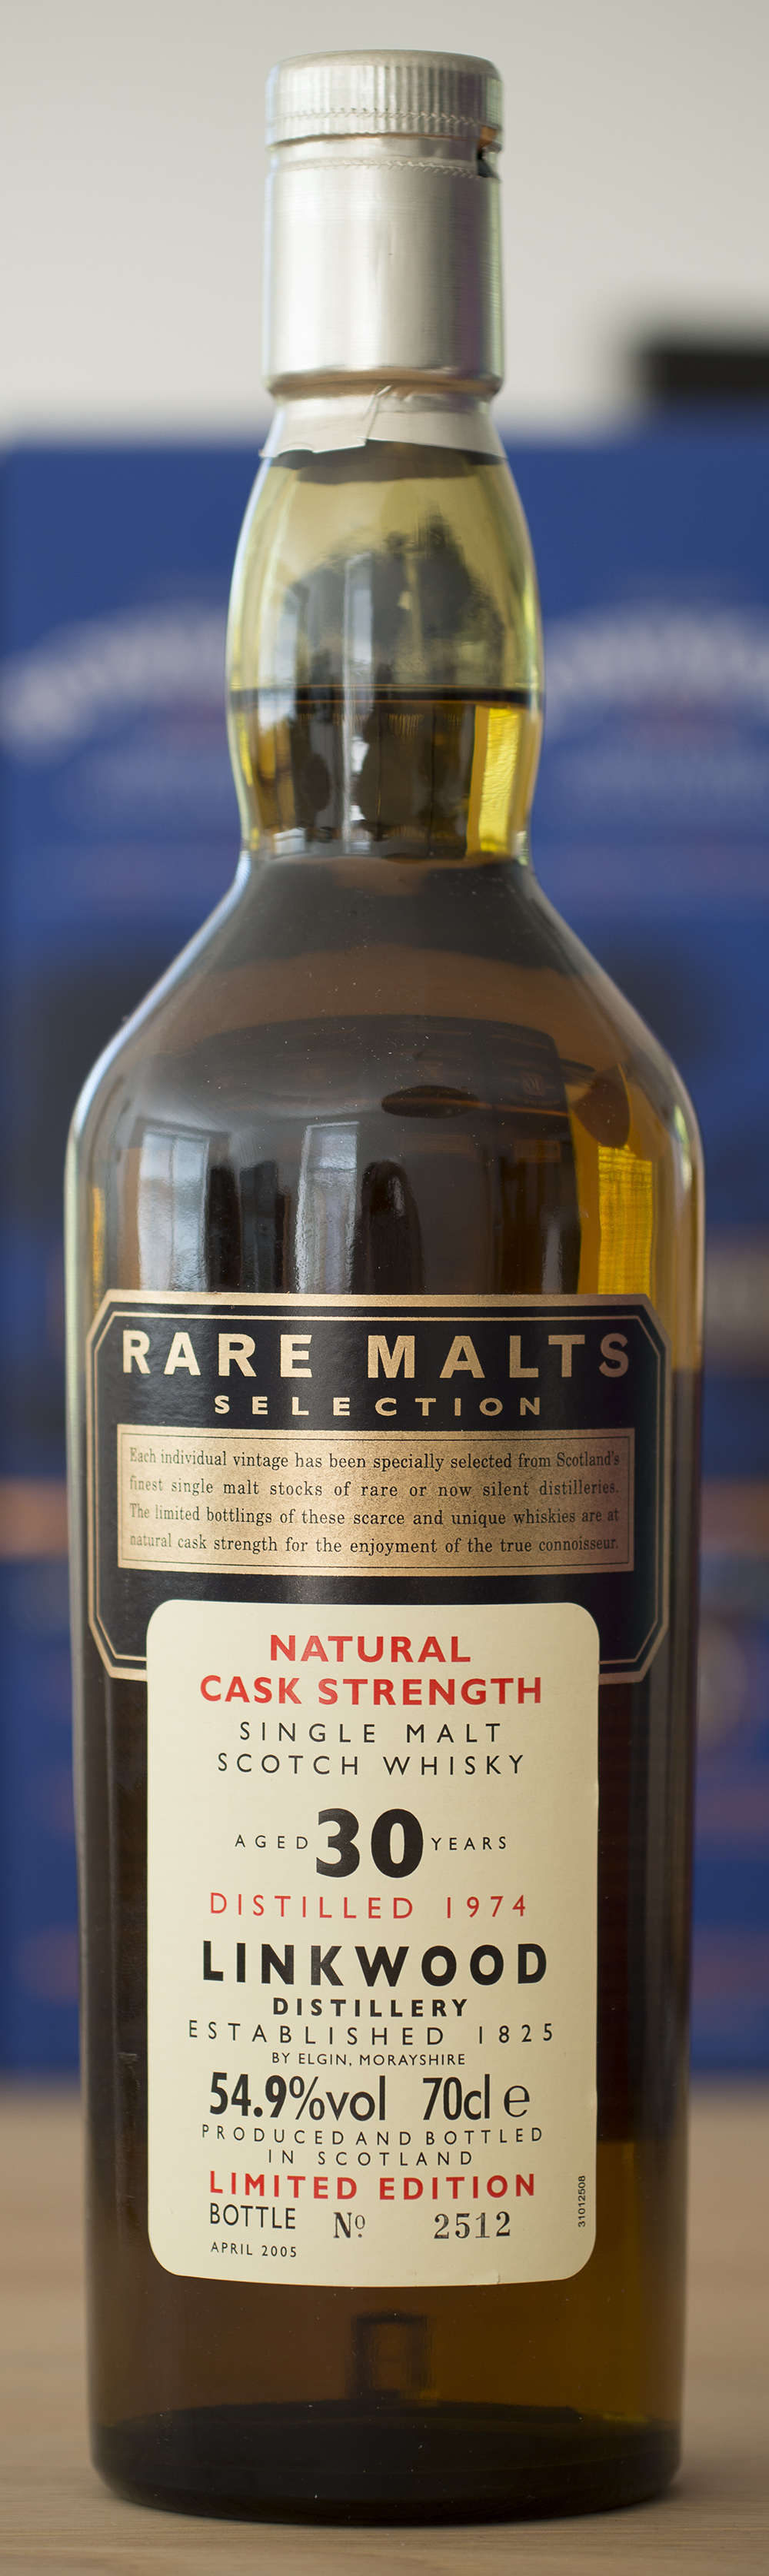 Billede: DSC_3319 Rare Malts - Linkwood 30 - distilled 1974.jpg